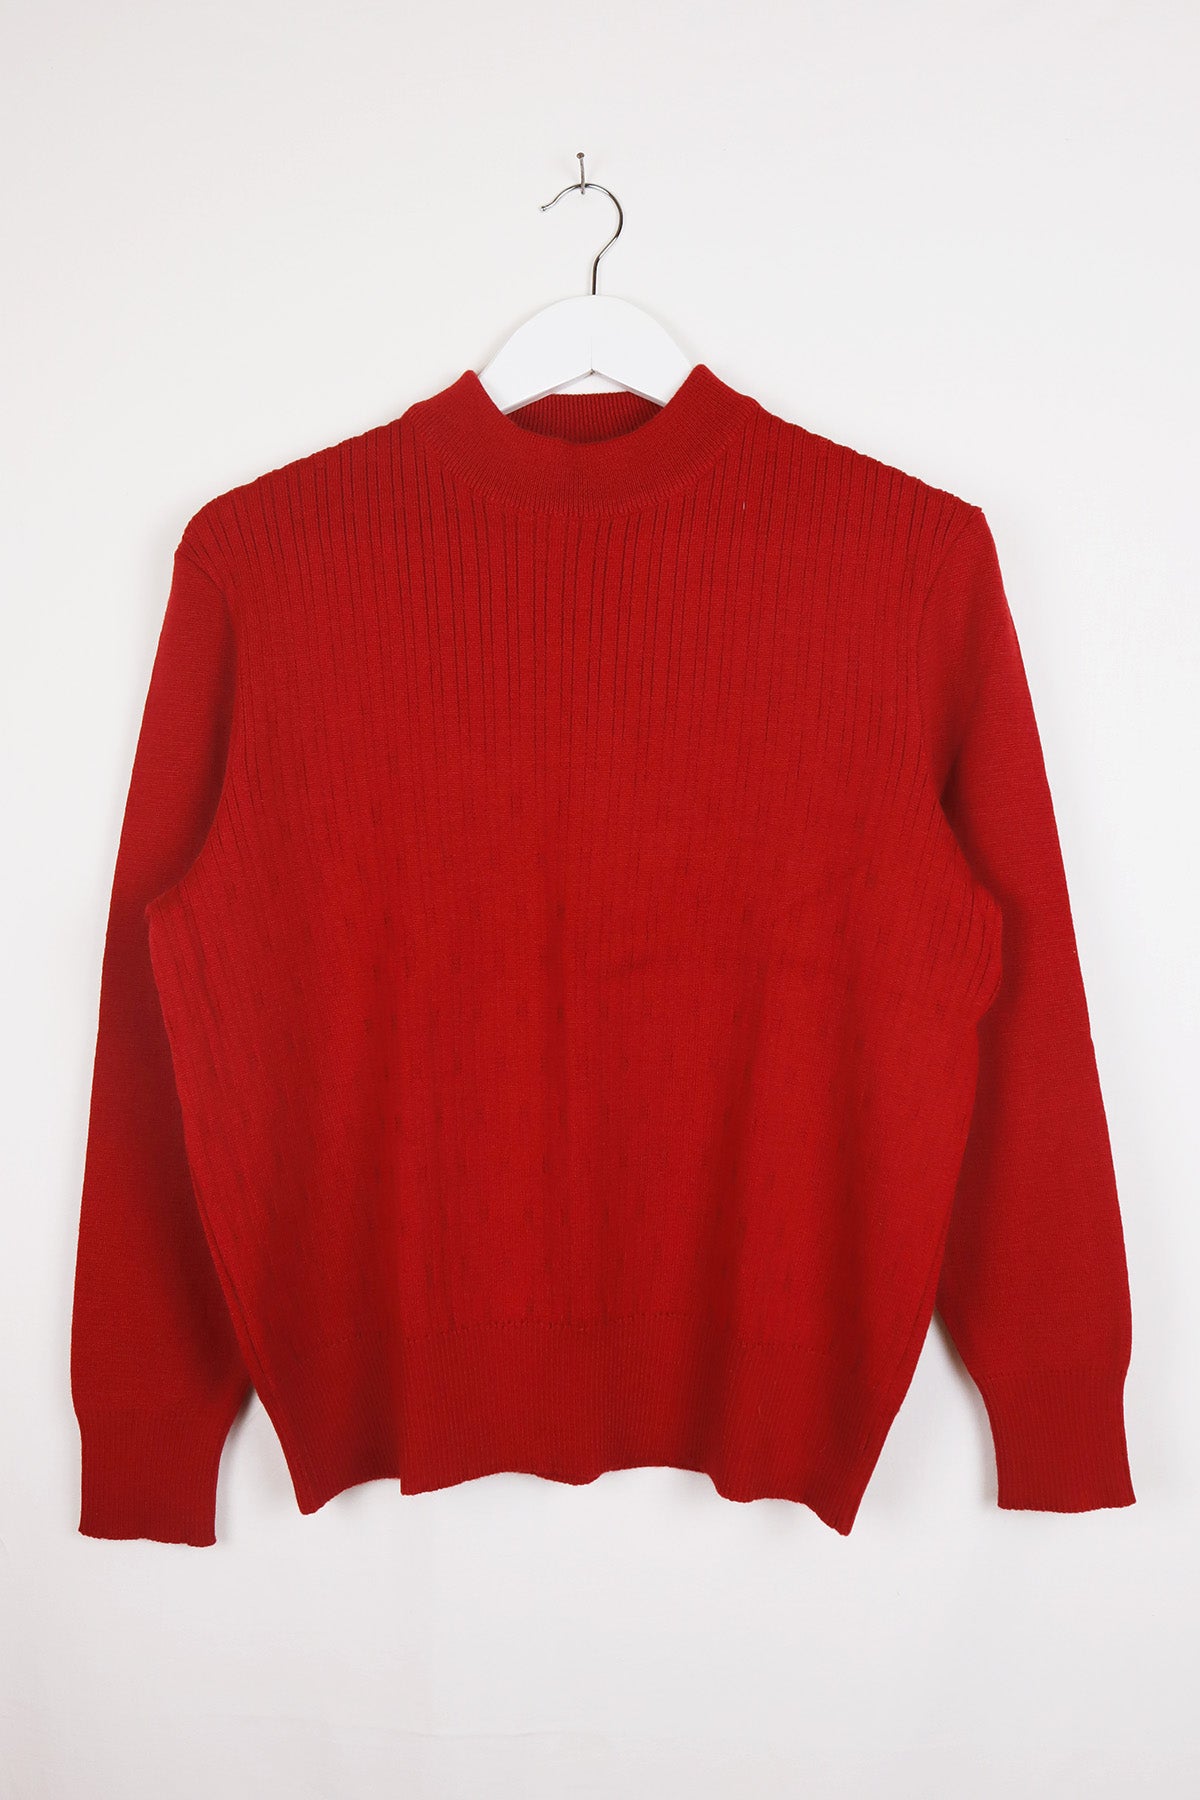 Feinstrick Vintage Pullover Rot ( Gr. S/M )